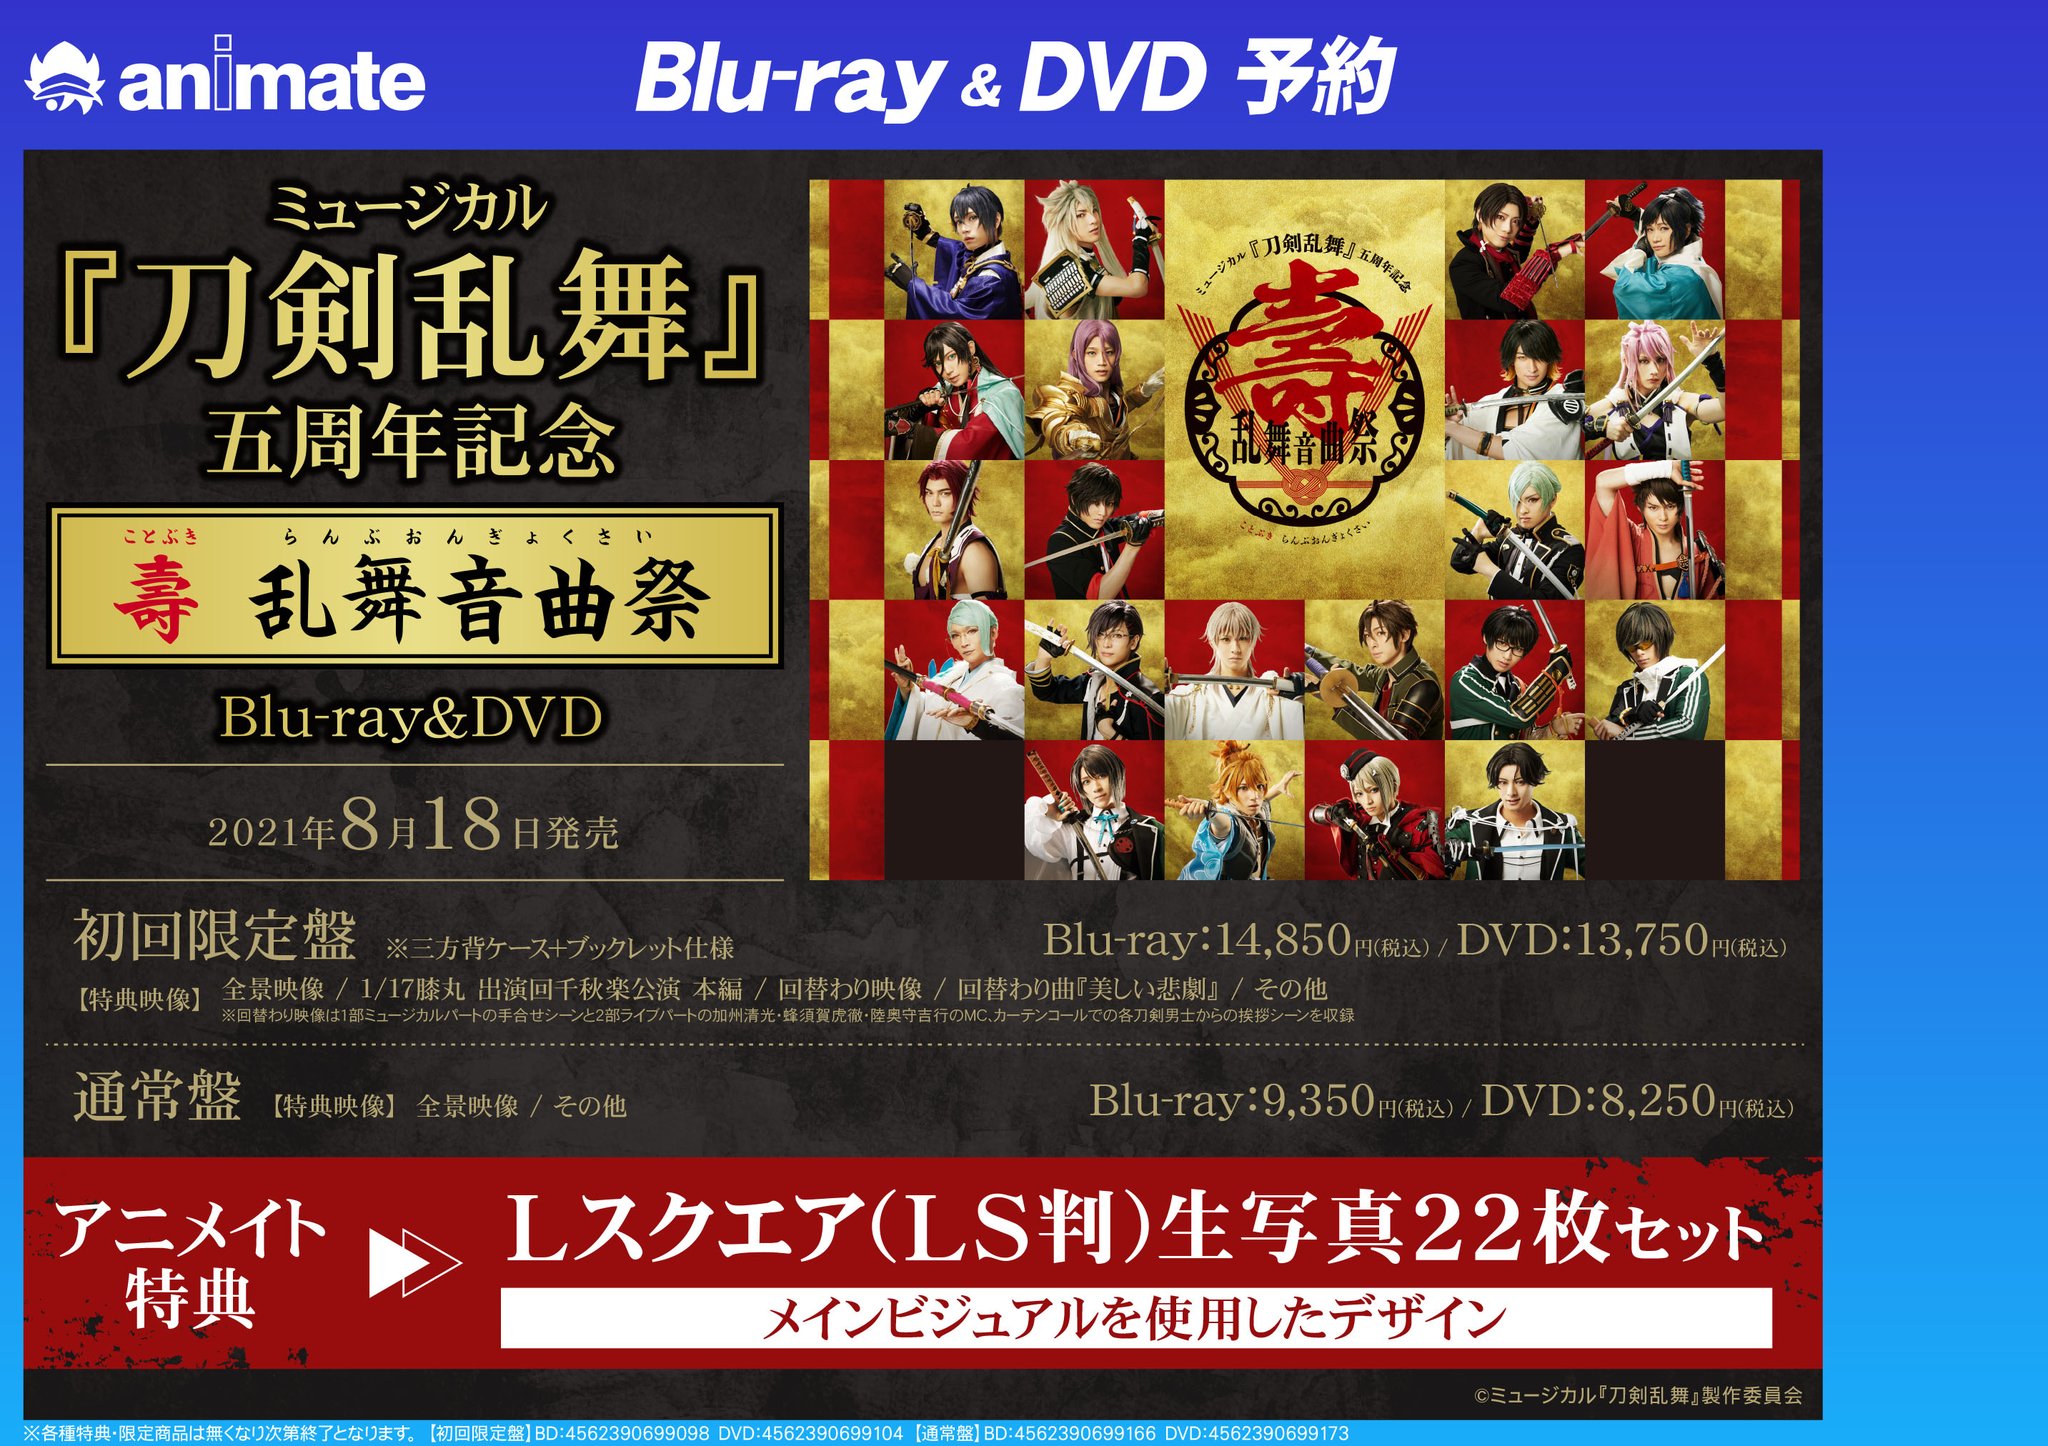 75%OFF!】 ミュージカル刀剣乱舞 壽乱舞音曲祭 Blu-ray パンフレット 